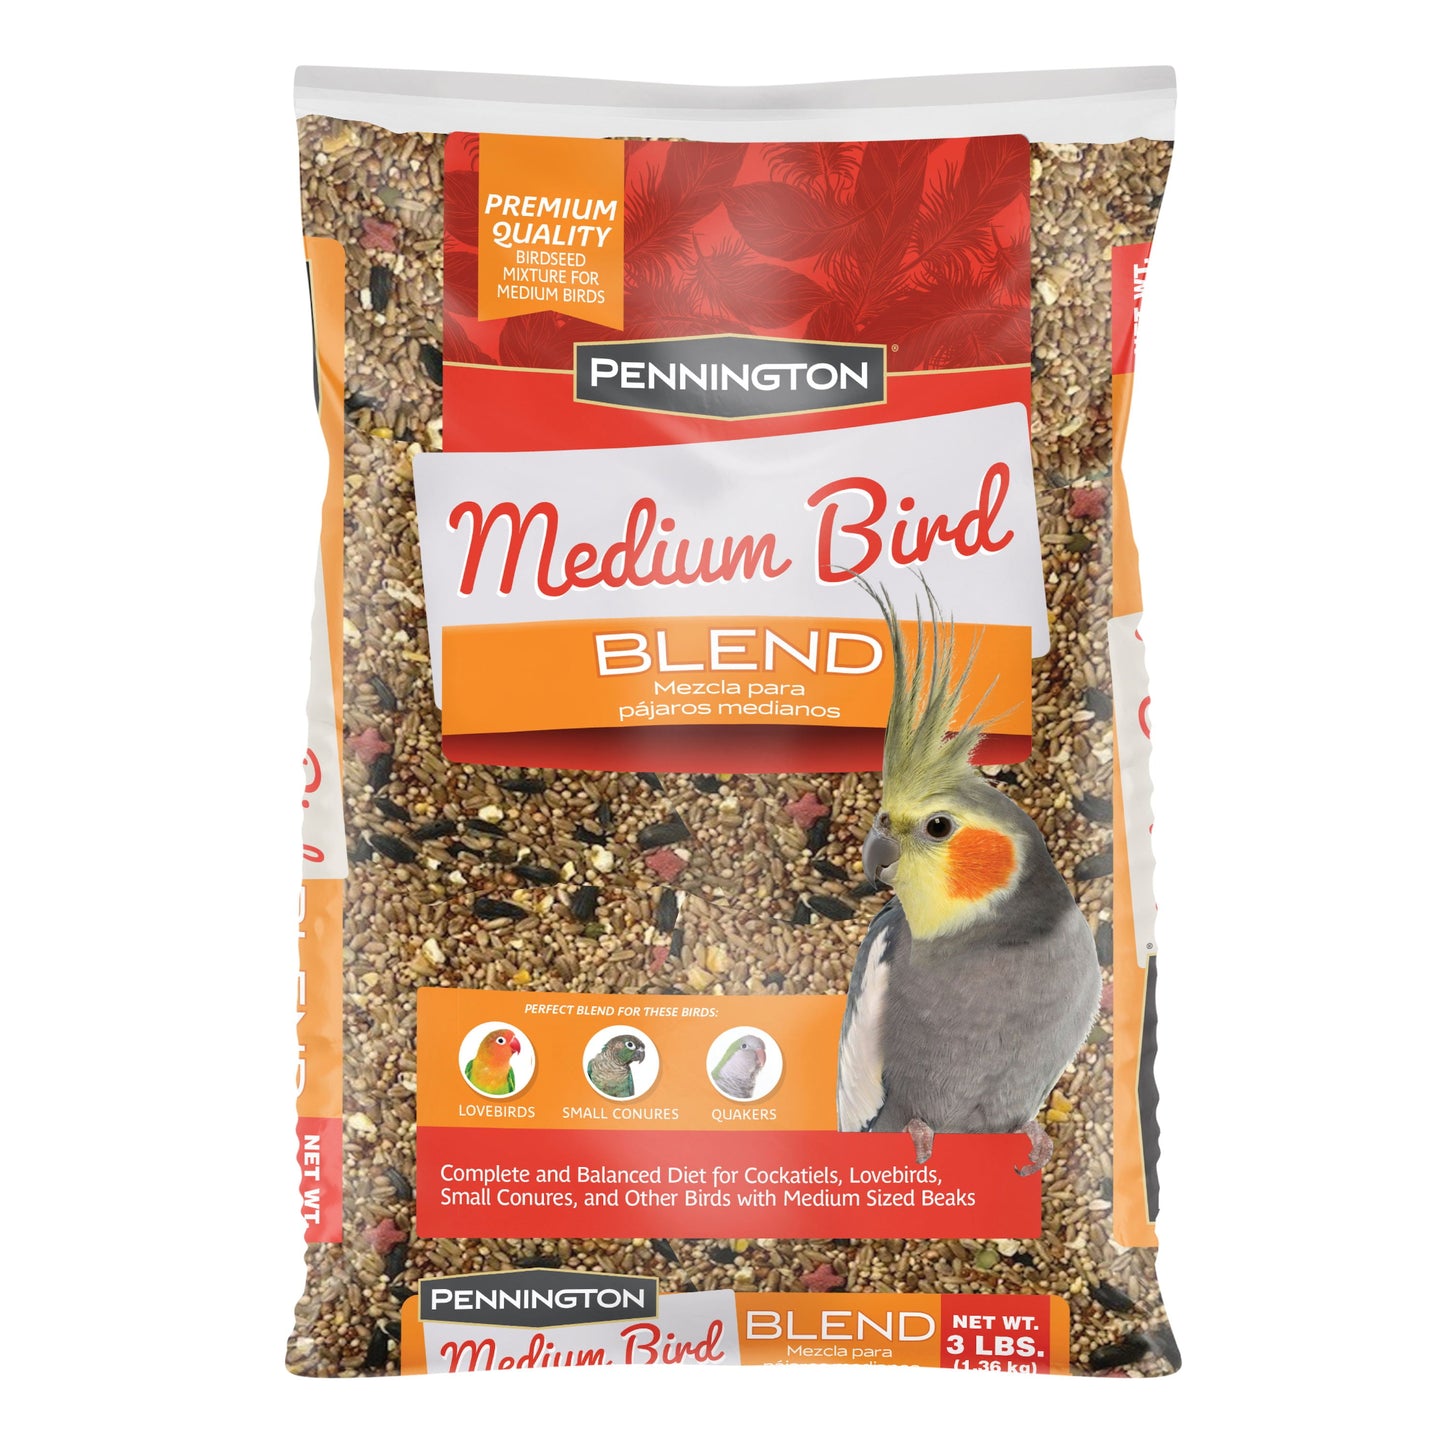 Medium Bird Blend Bird Food for Cockatiels Love Birds 3 lb Bag